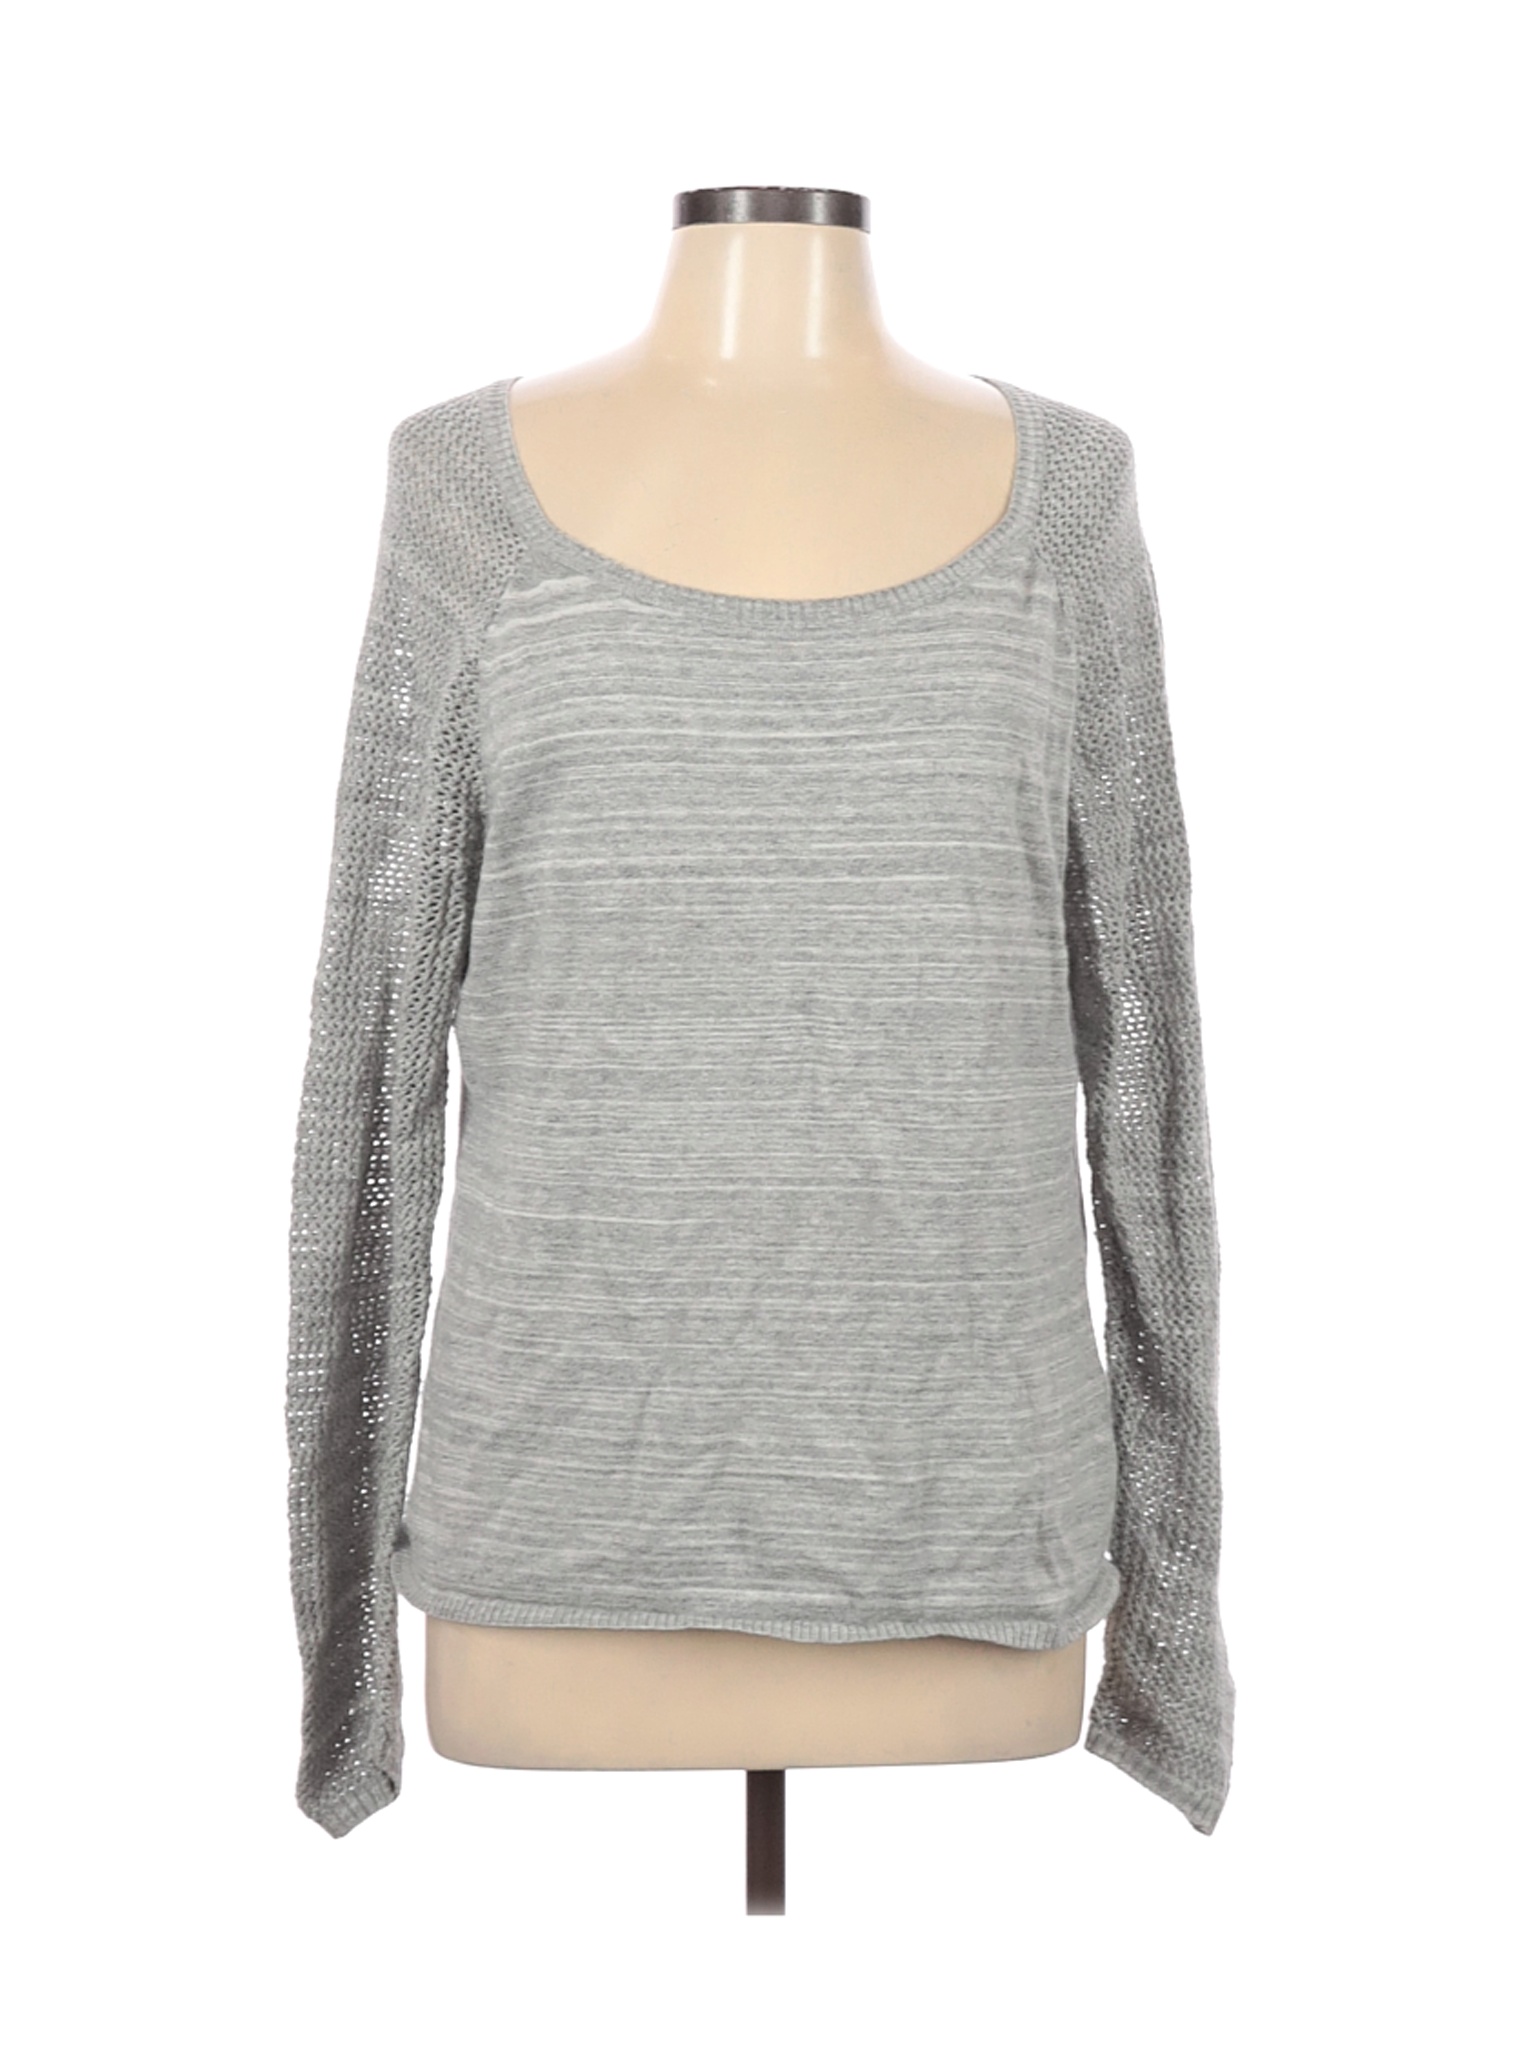 Columbia Women Gray Pullover Sweater L | eBay